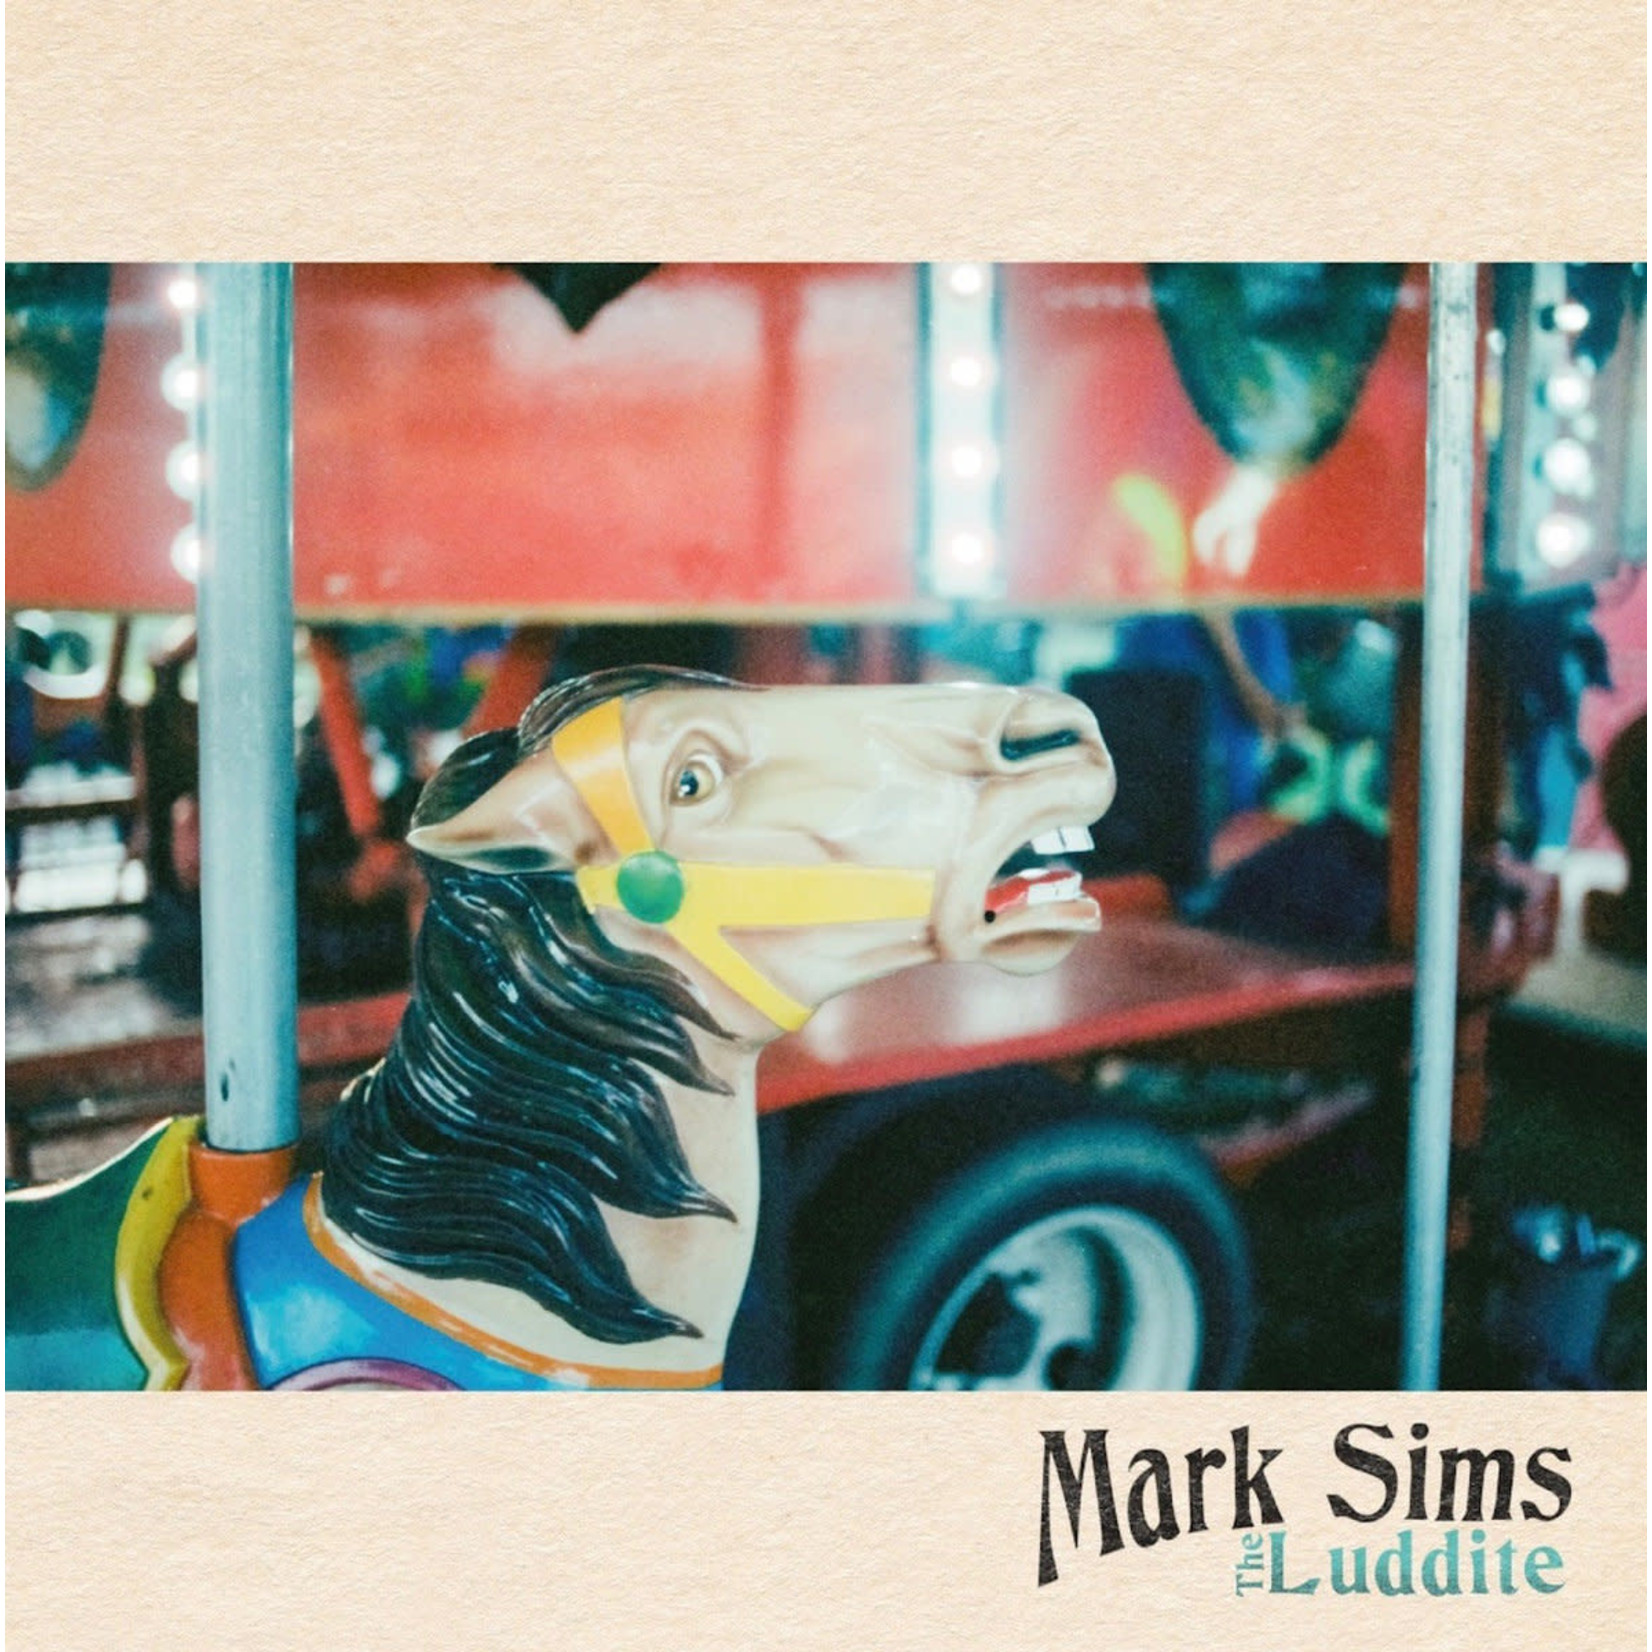 Mark Sims - The Luddite (CD)